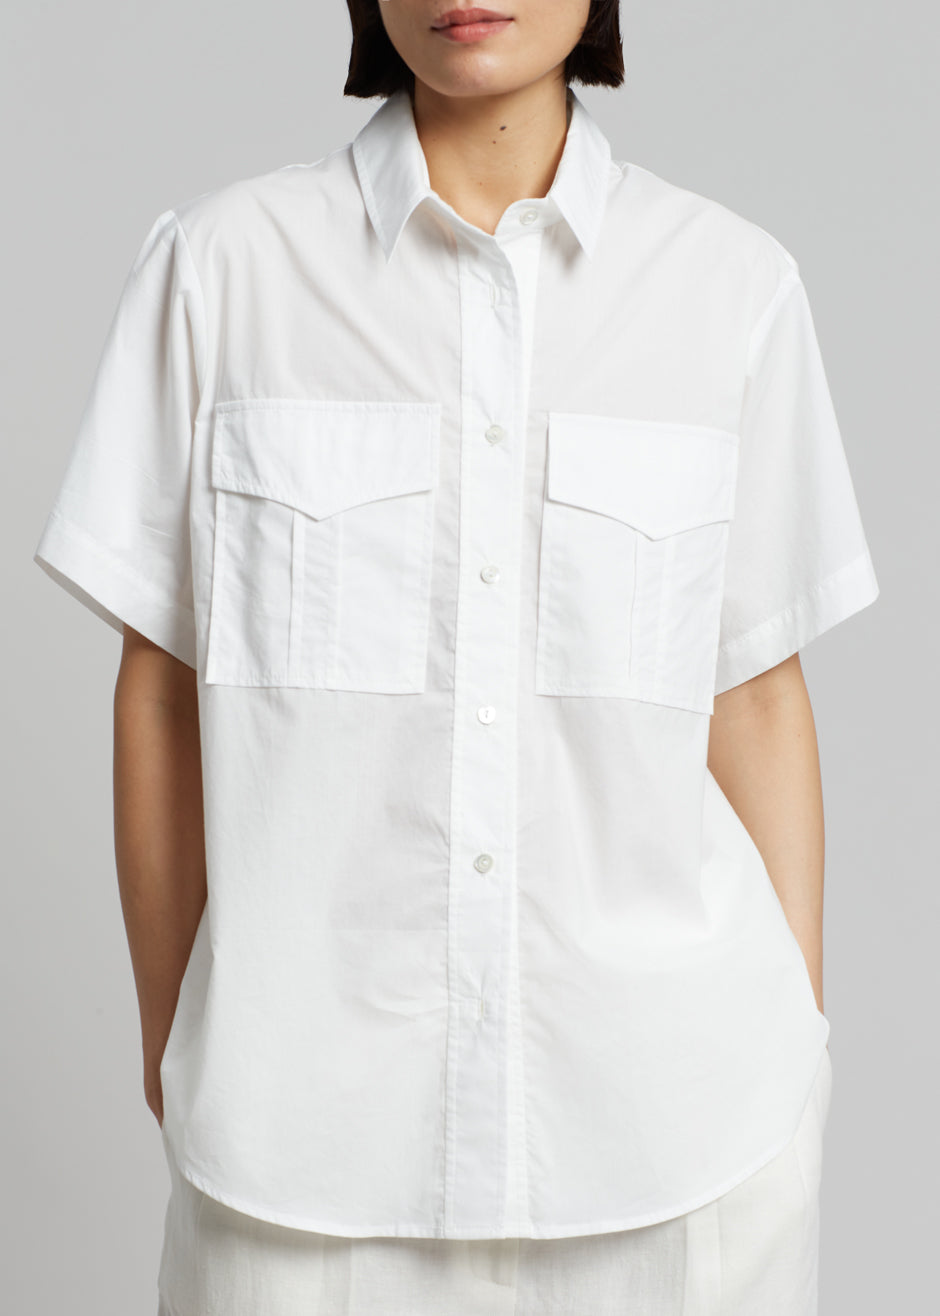 MATIN Short Sleeve Pocket Shirt - White - 1